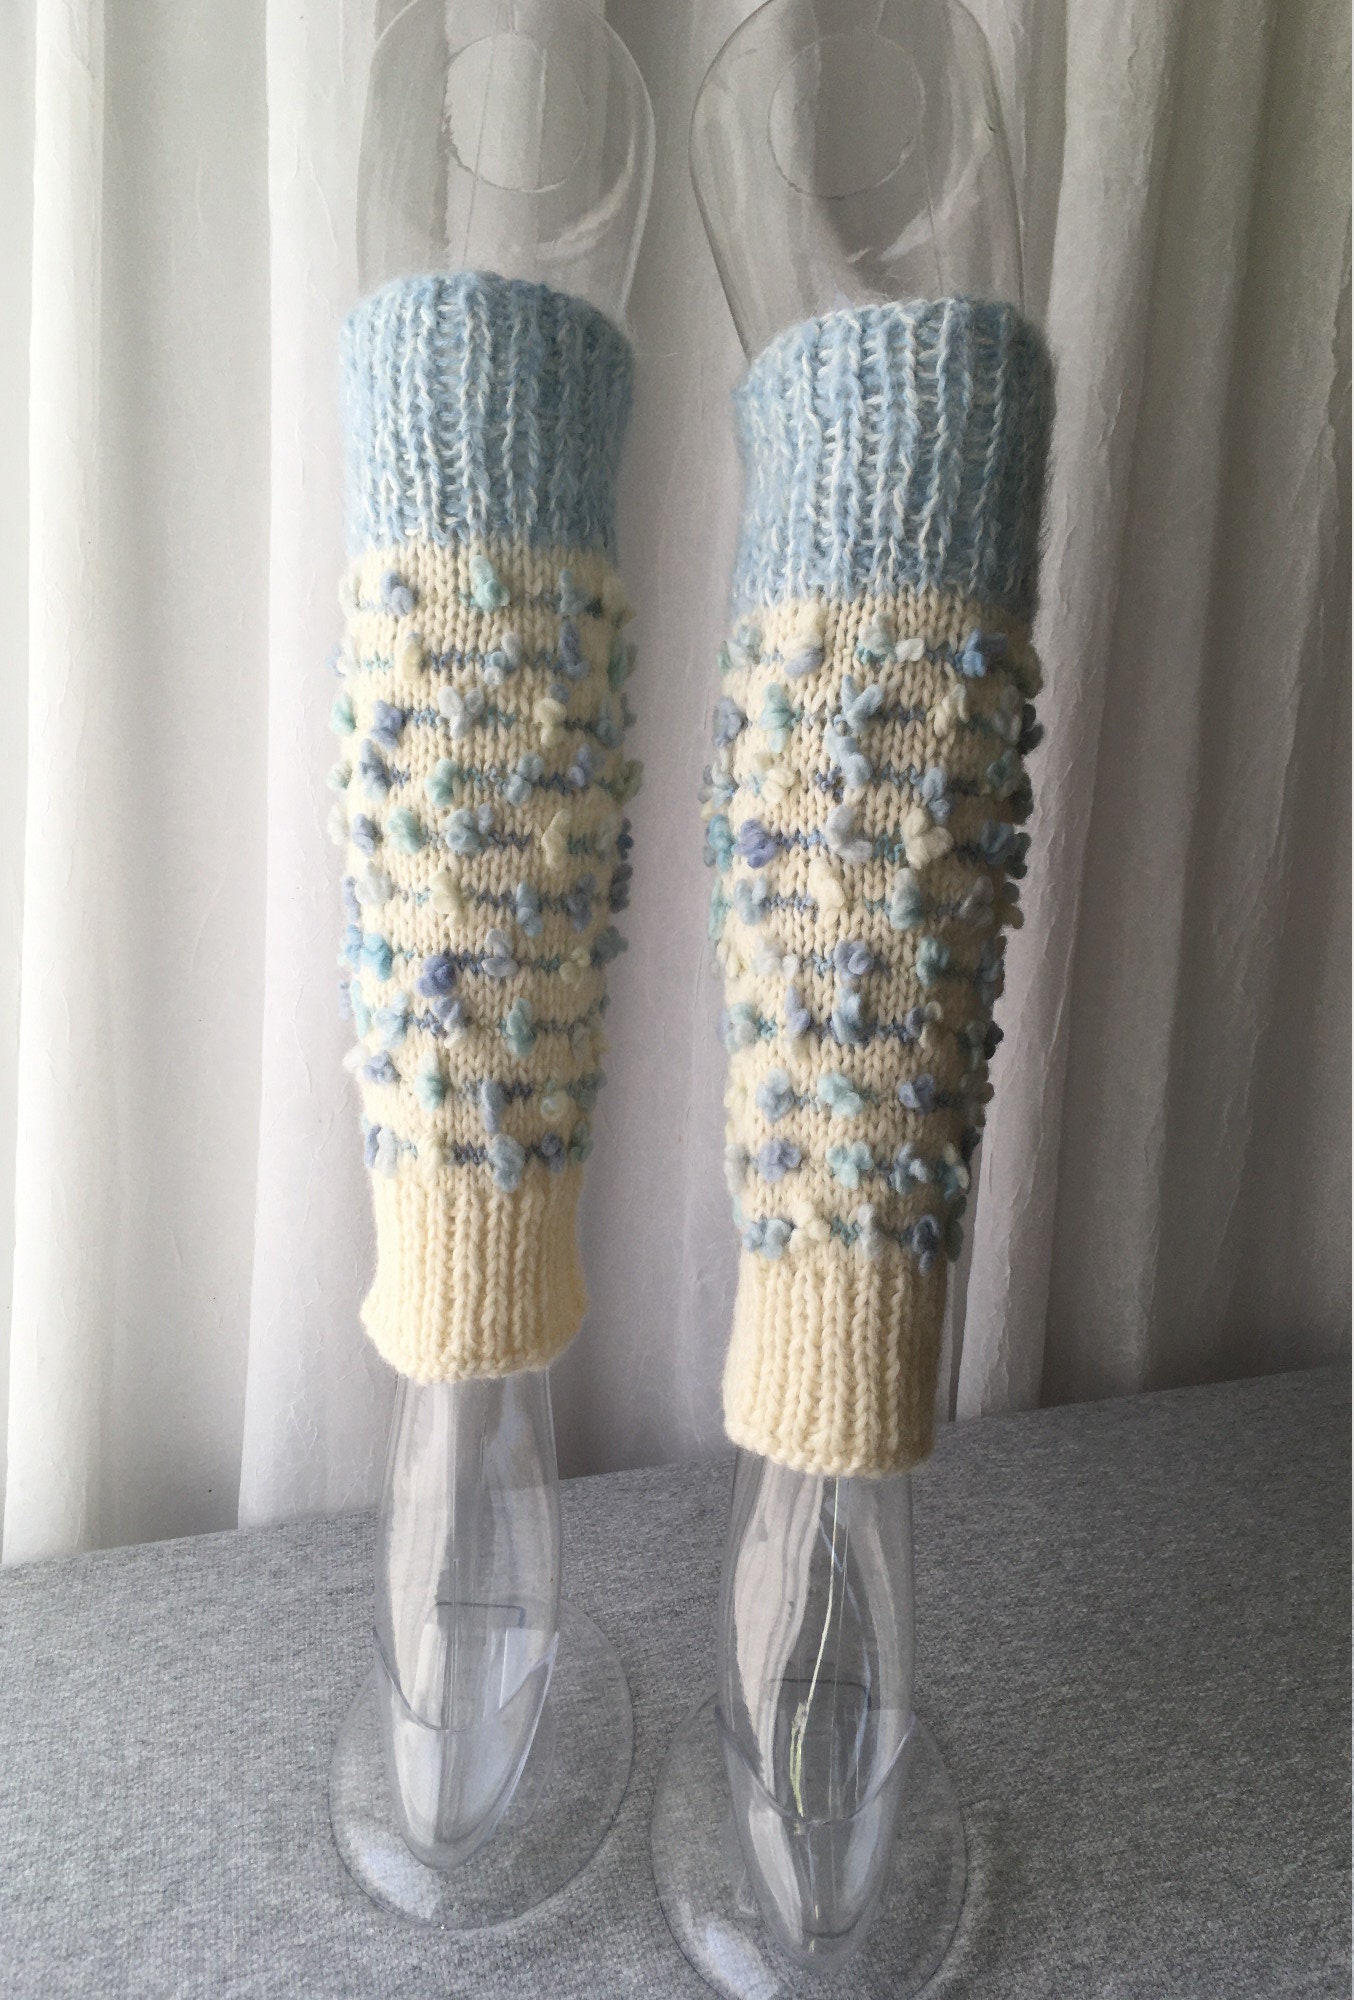 Hand Knit ART Textured Super Thick Soft Leg Warmers 100% Virgin Wool Mohair in White & Blue  Wearable Fiber Art  Dance  Yoga GLACIER